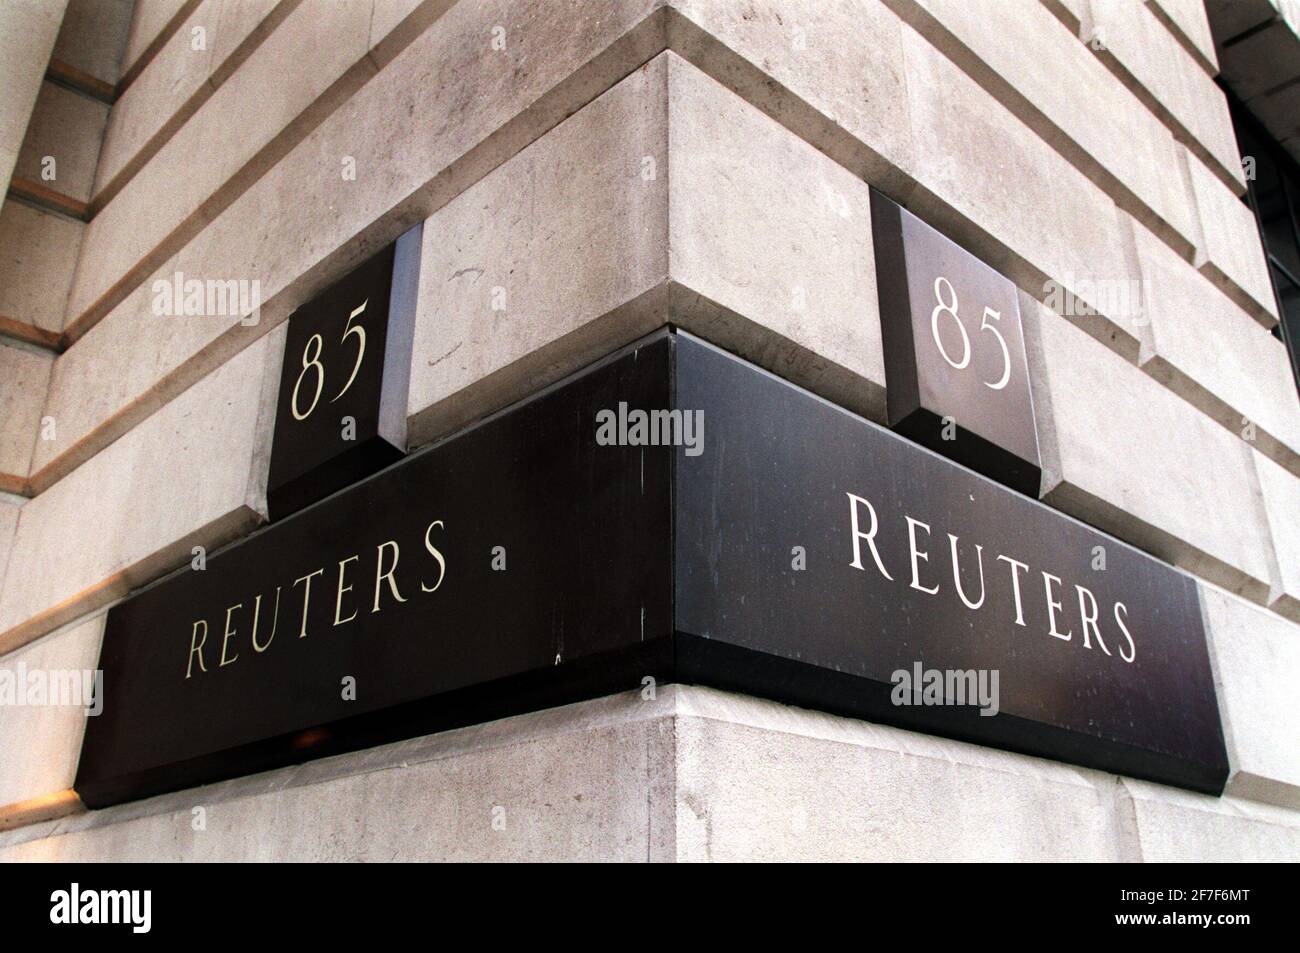 Reuters news agency headquarters Stock Photo - Alamy